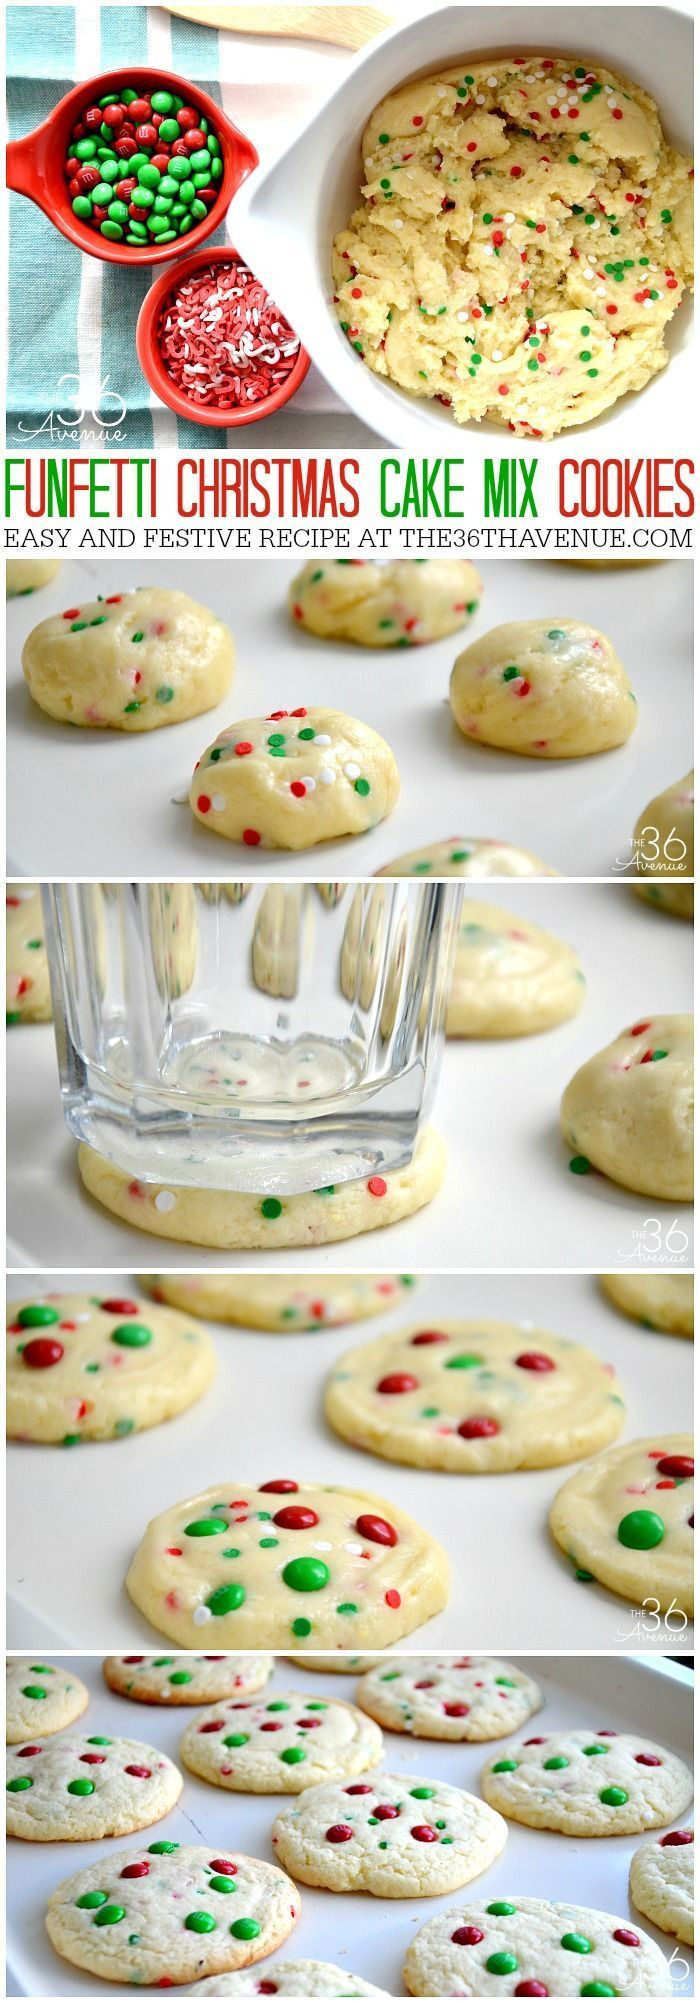 Christmas Cookies Recipe Pinterest
 100 Christmas Cookie Recipes on Pinterest